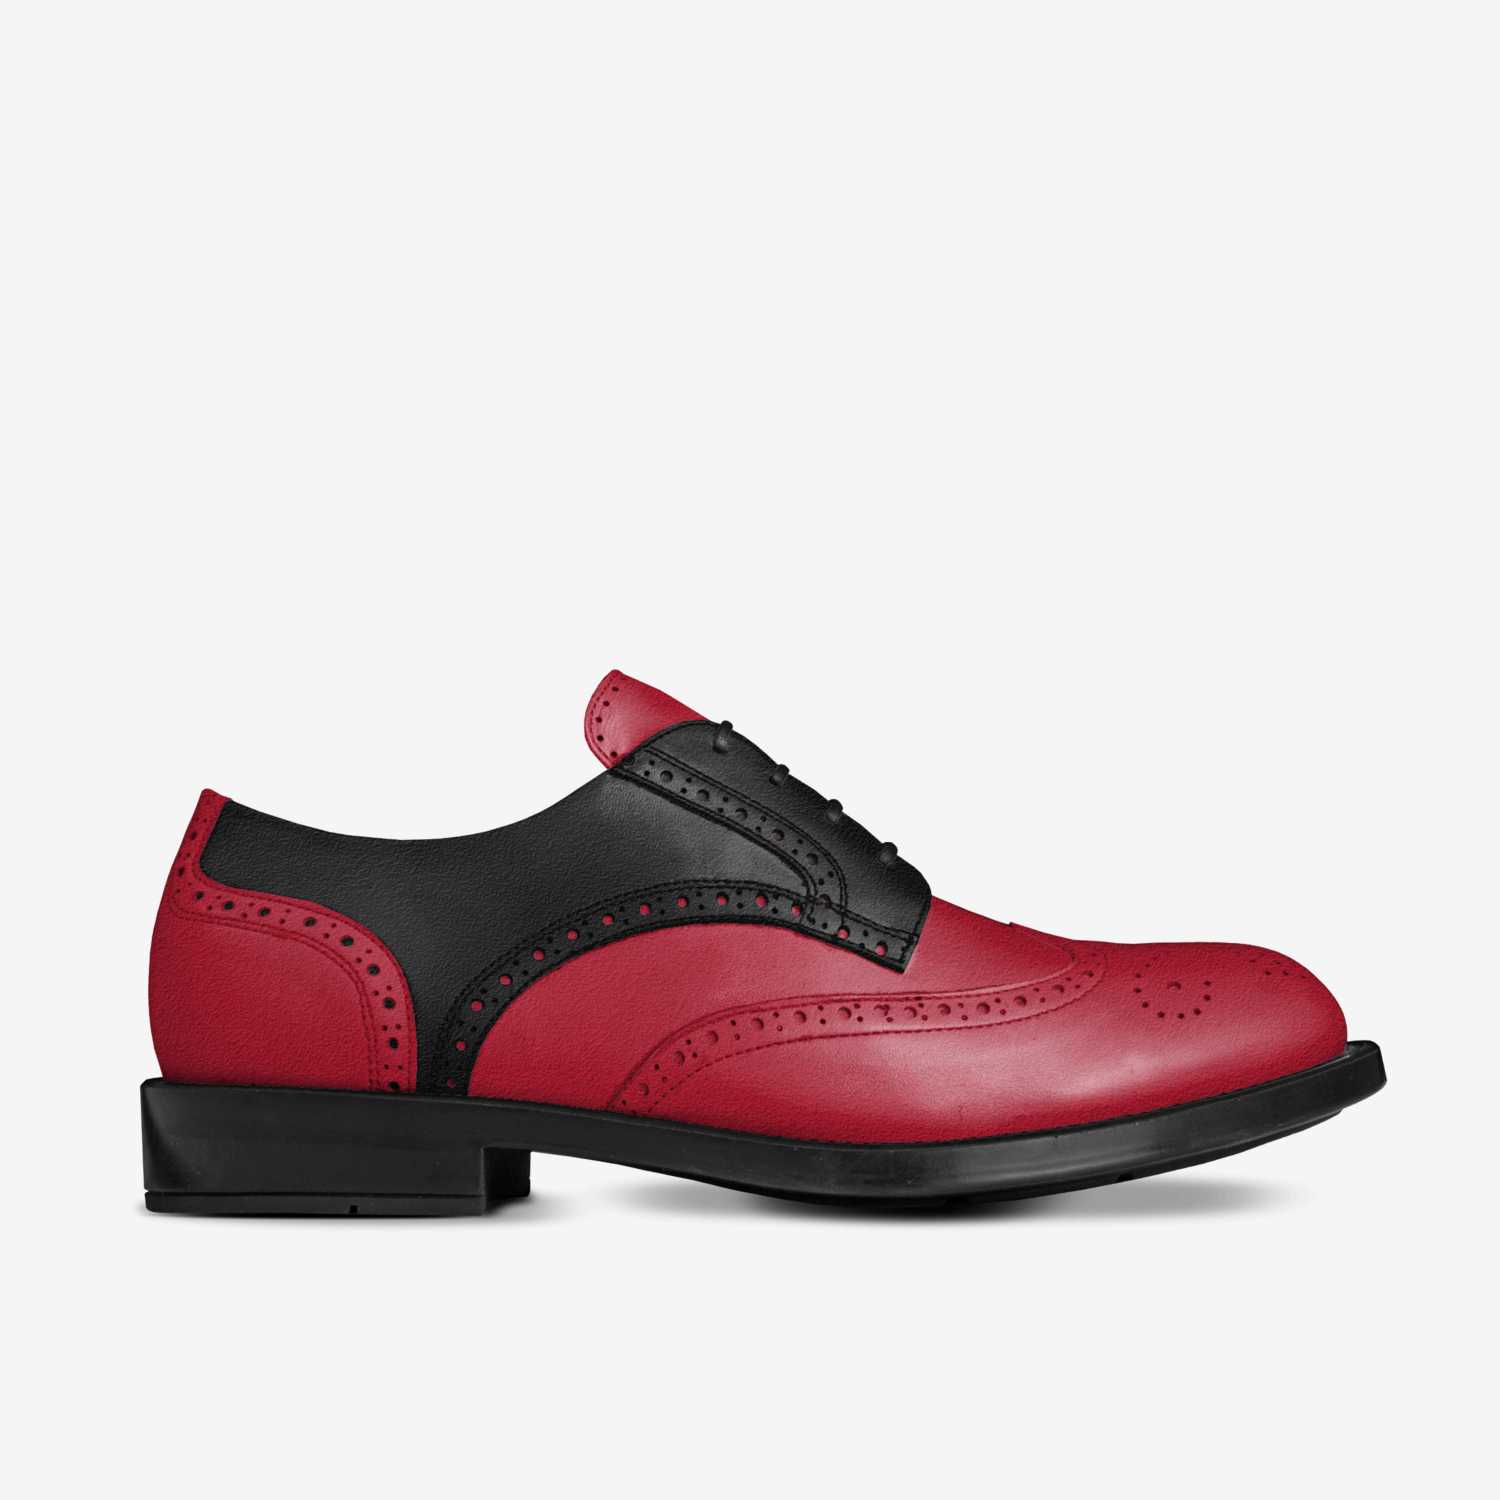 RDynasty custom made in Italy shoes by Leirbag Zeugirdor | Side view